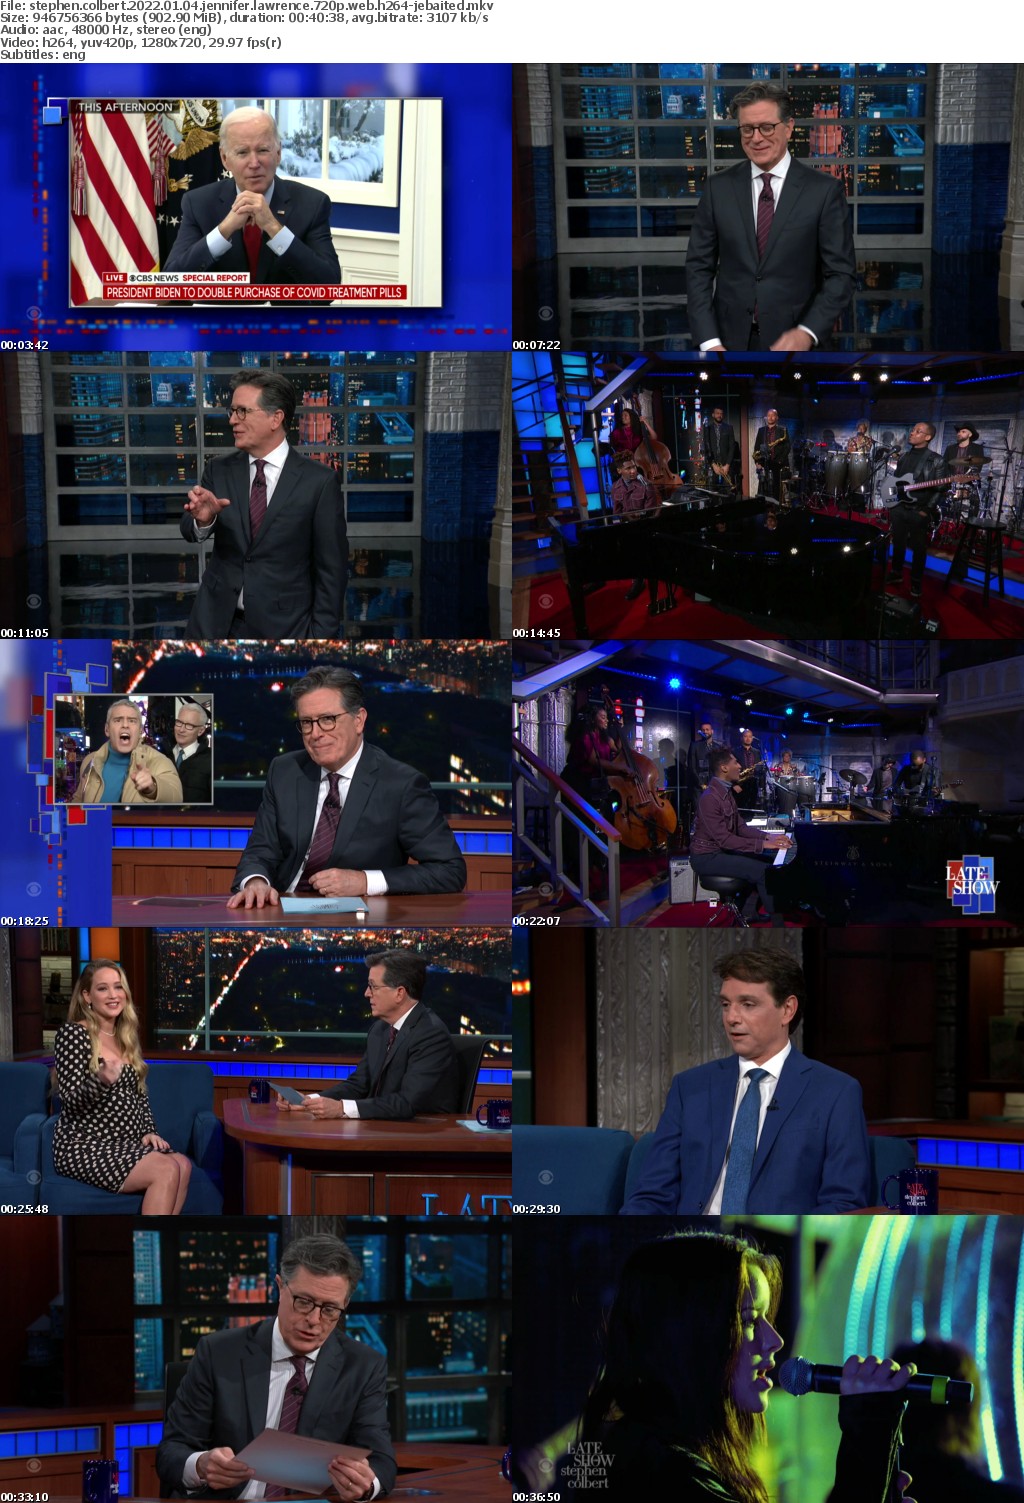 Stephen Colbert 2022 01 04 Jennifer Lawrence 720p WEB H264-JEBAITED